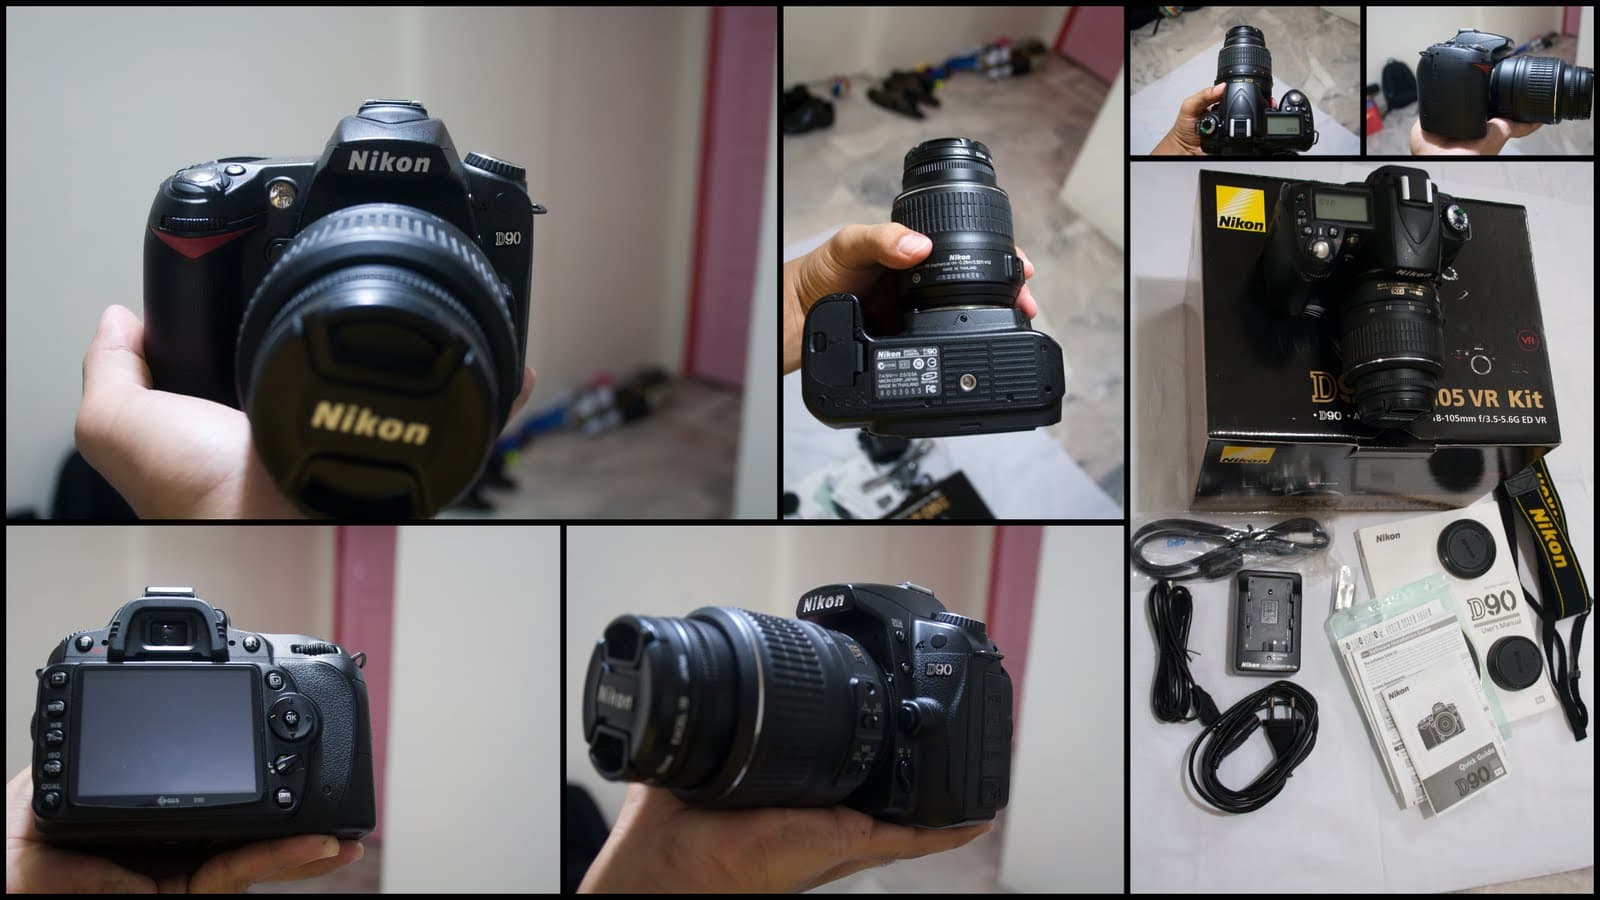 Nikon D90 SLR Digital Camera (Includes Manufacturer's Supplied Accessories)